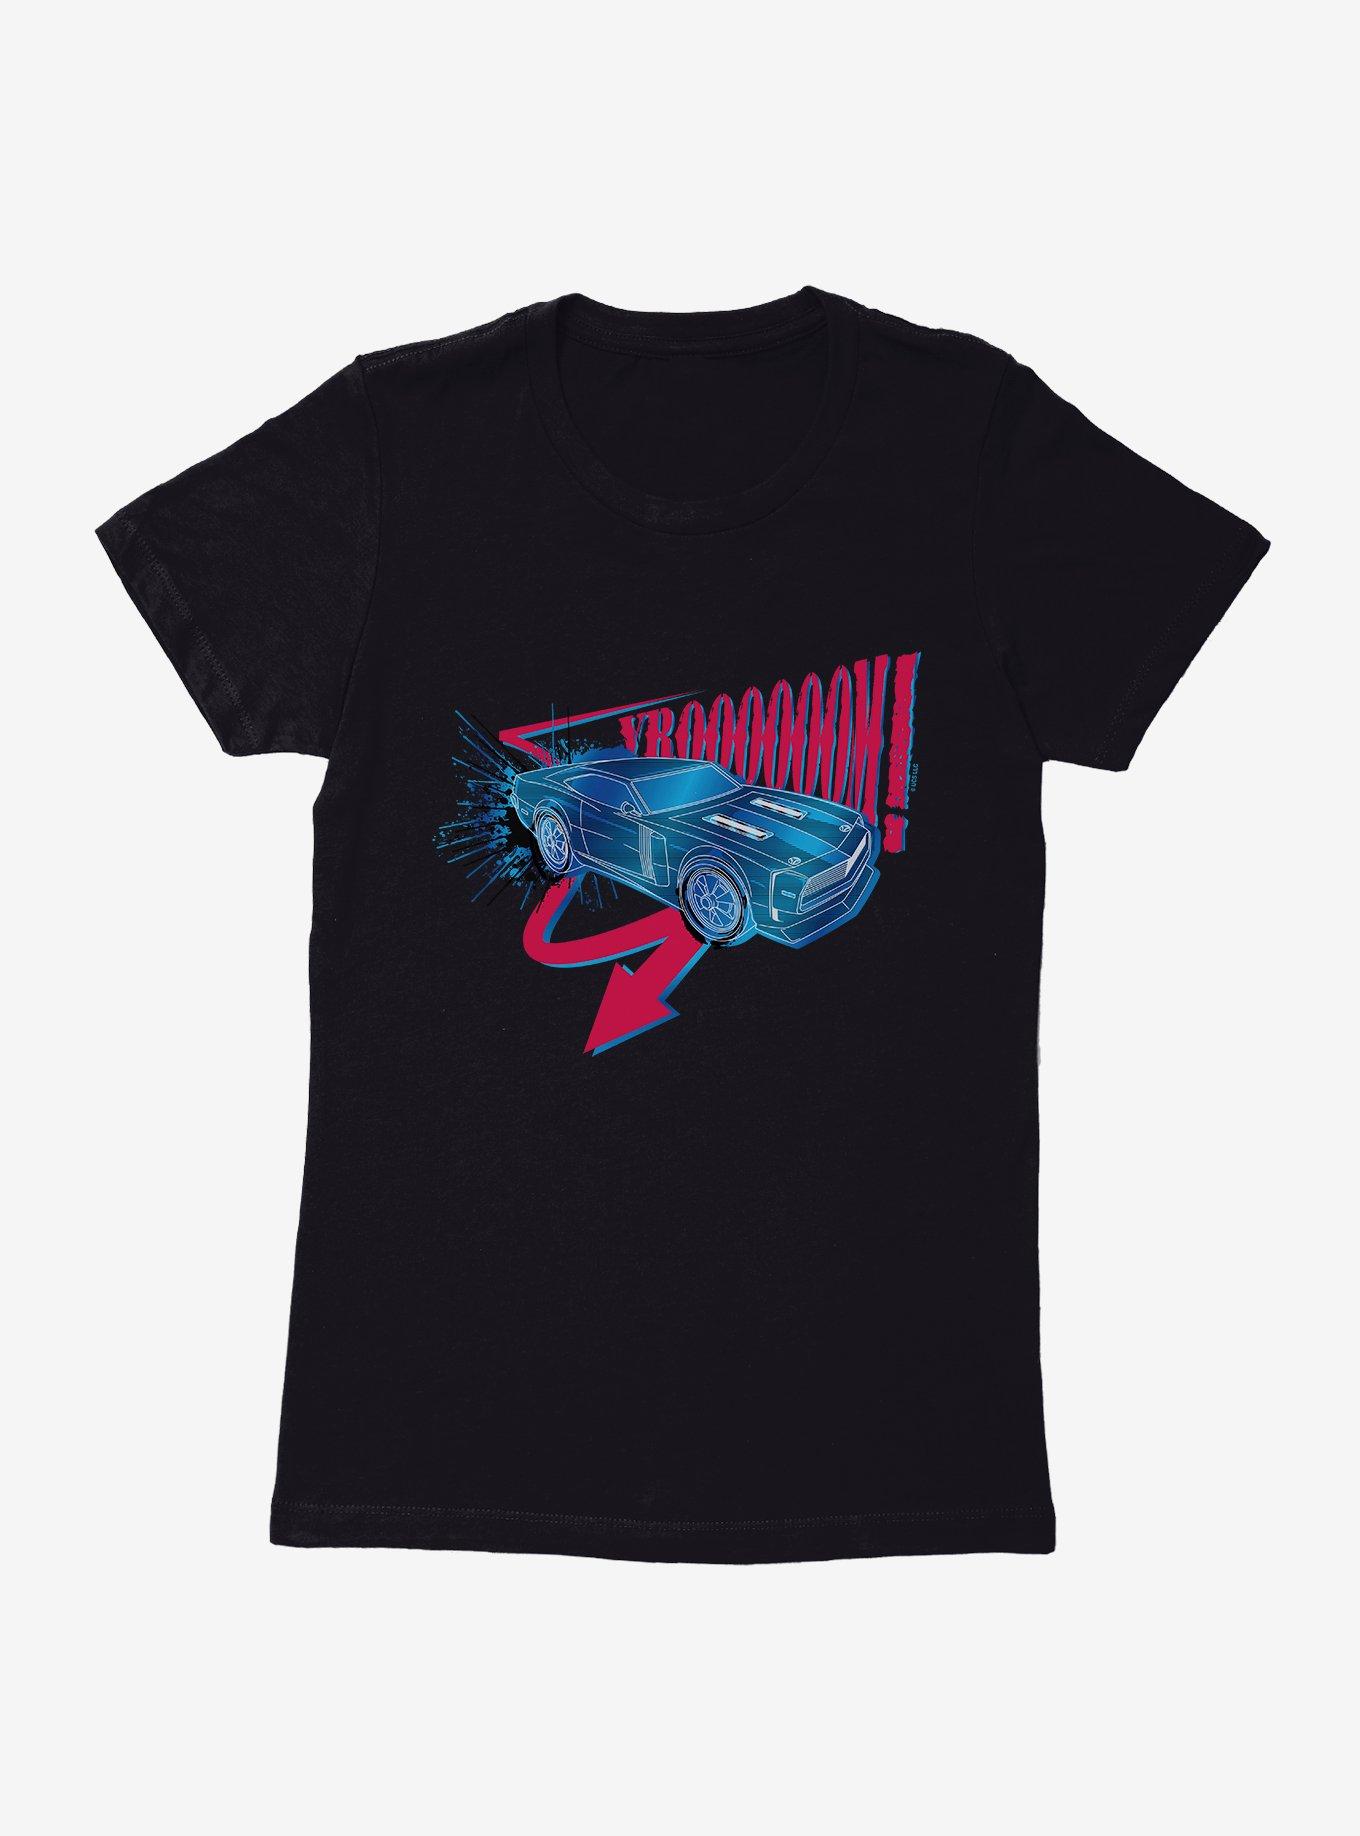 Fast & Furious Vroom! Womens T-Shirt, BLACK, hi-res